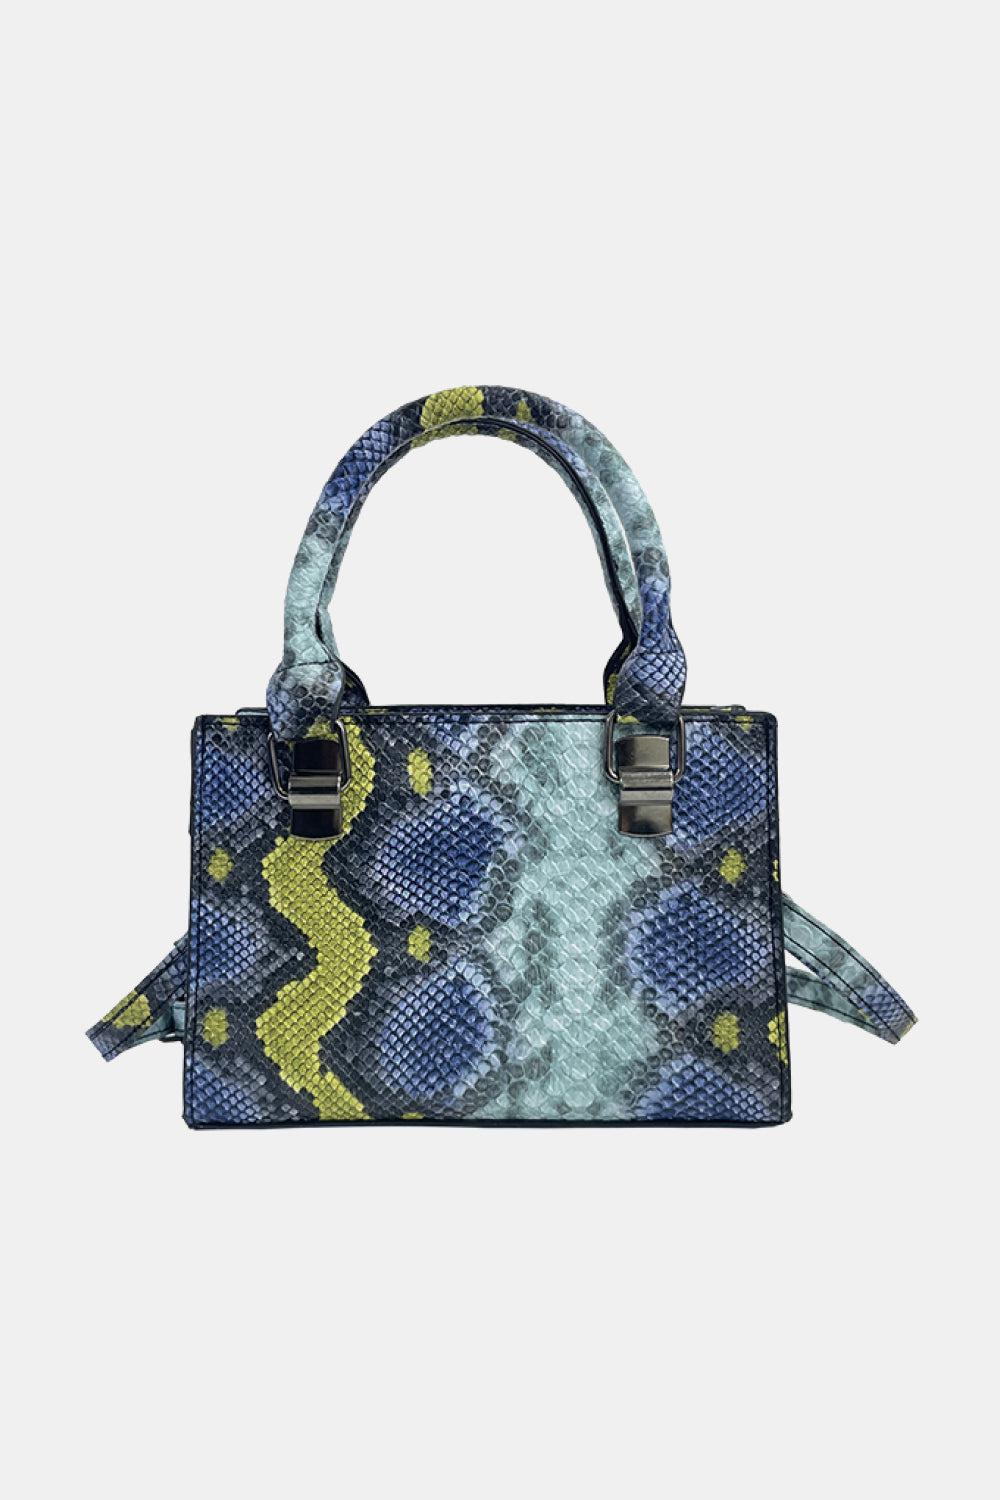 Snakeskin Print PU Leather Handbag BLUE ZONE PLANET